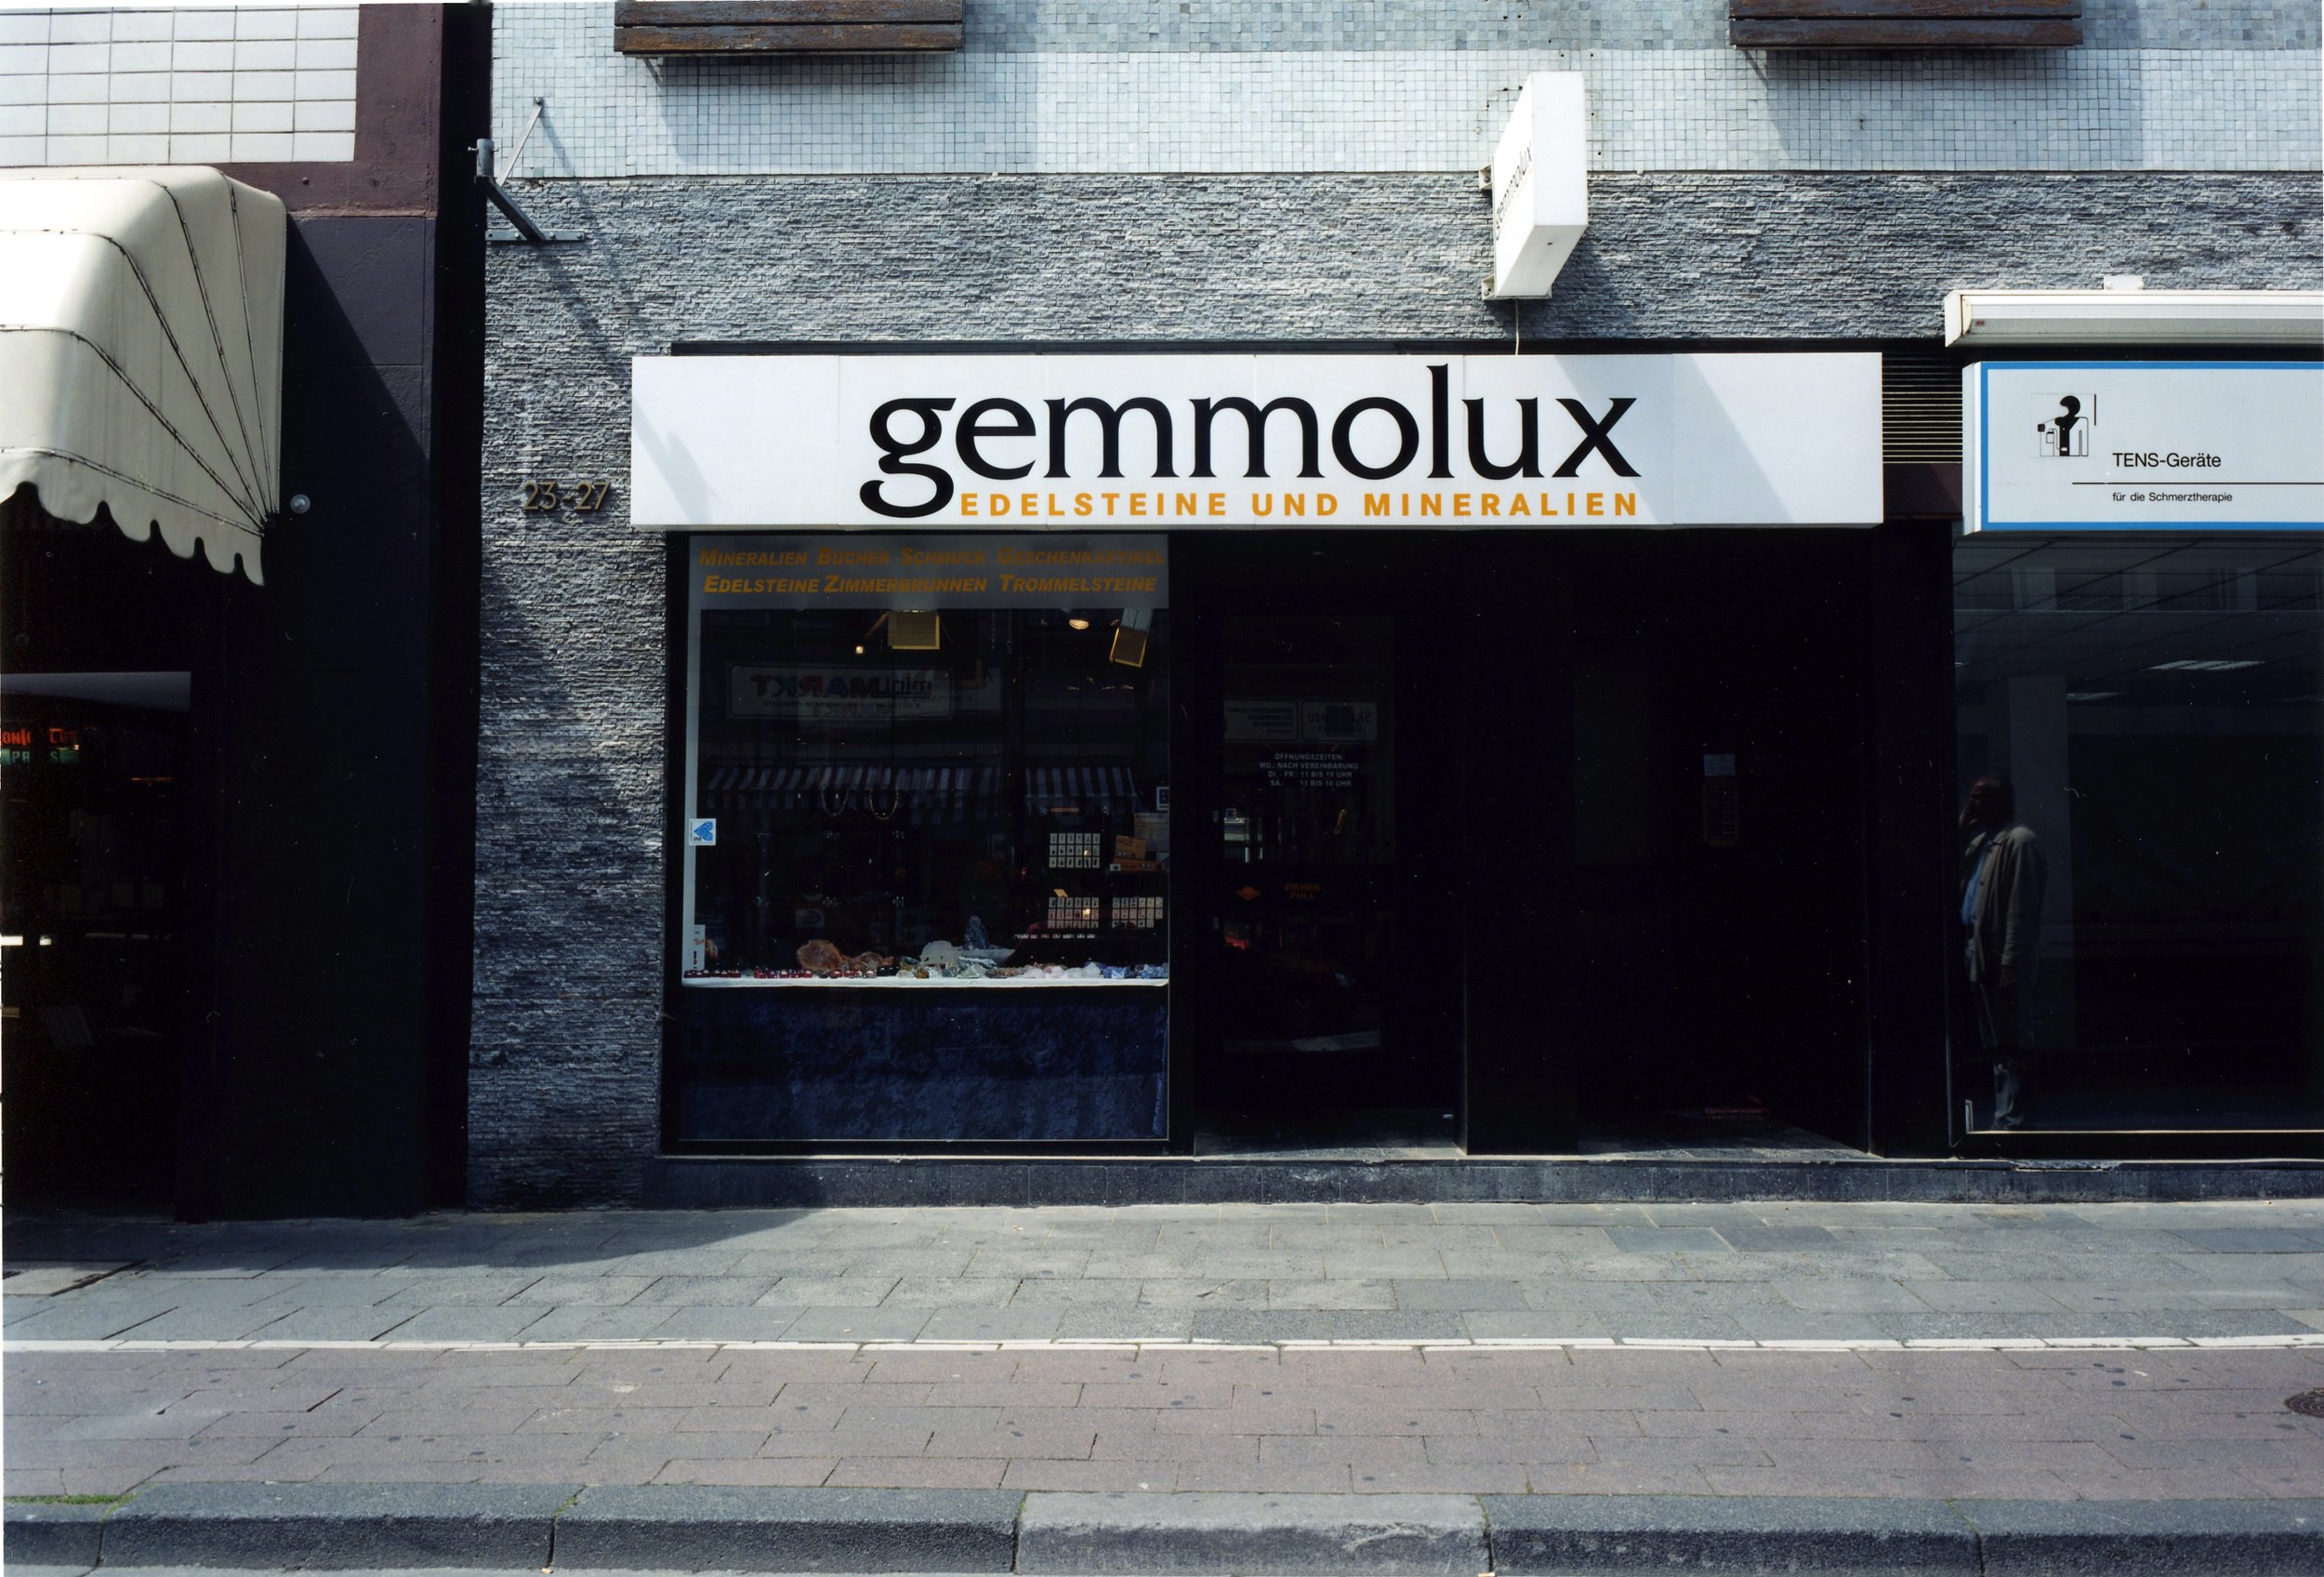  Gemmolux (formerly Cafe Wuesten), Cologne, 2006 